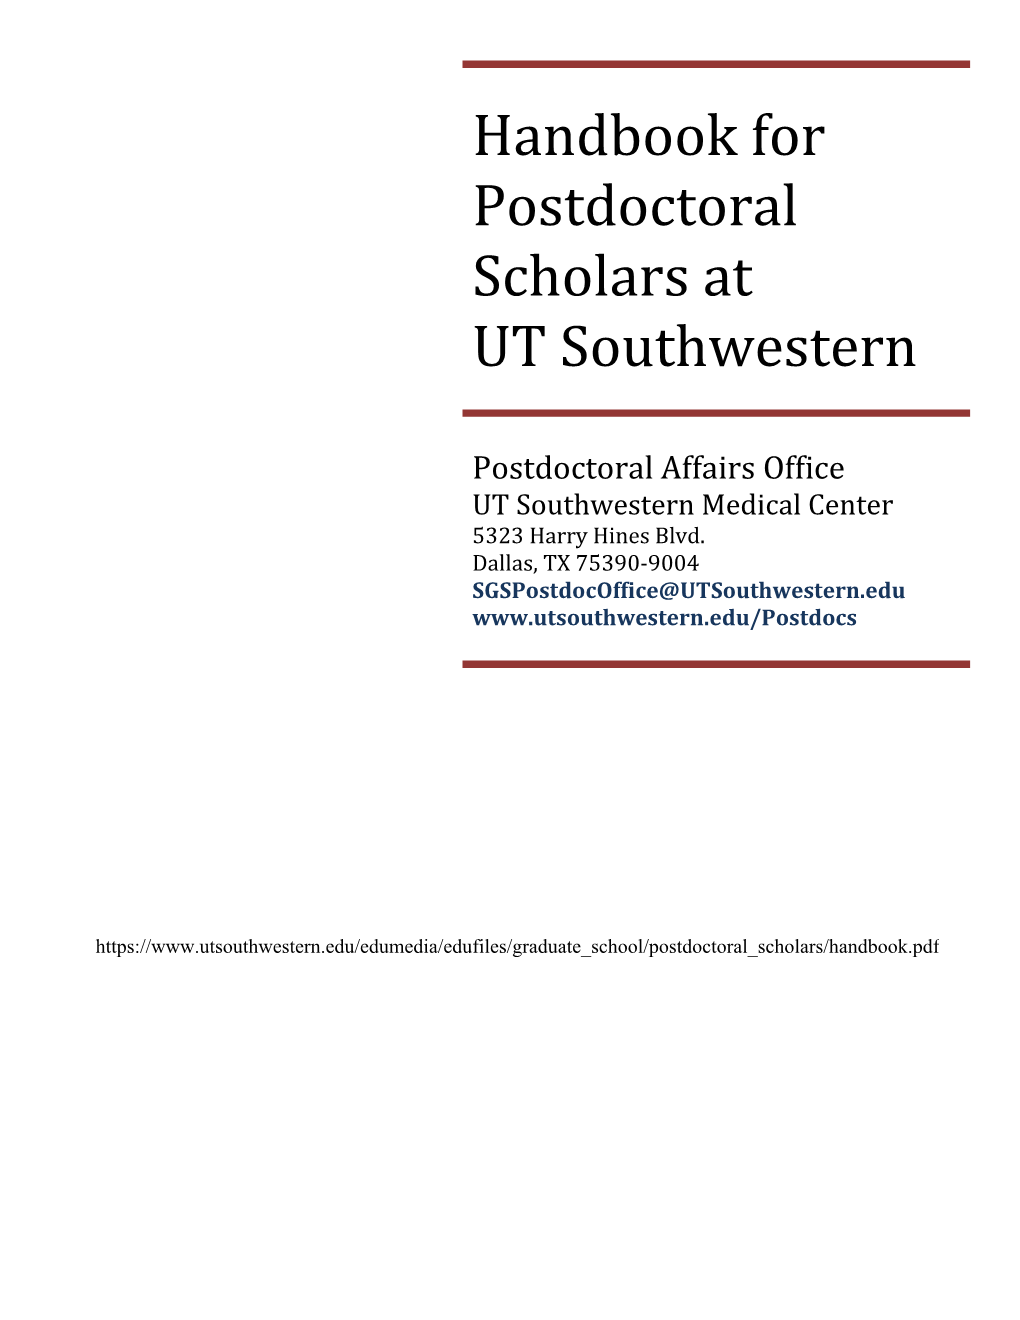 Handbook for Postdoctoral Scholars at UT Southwestern